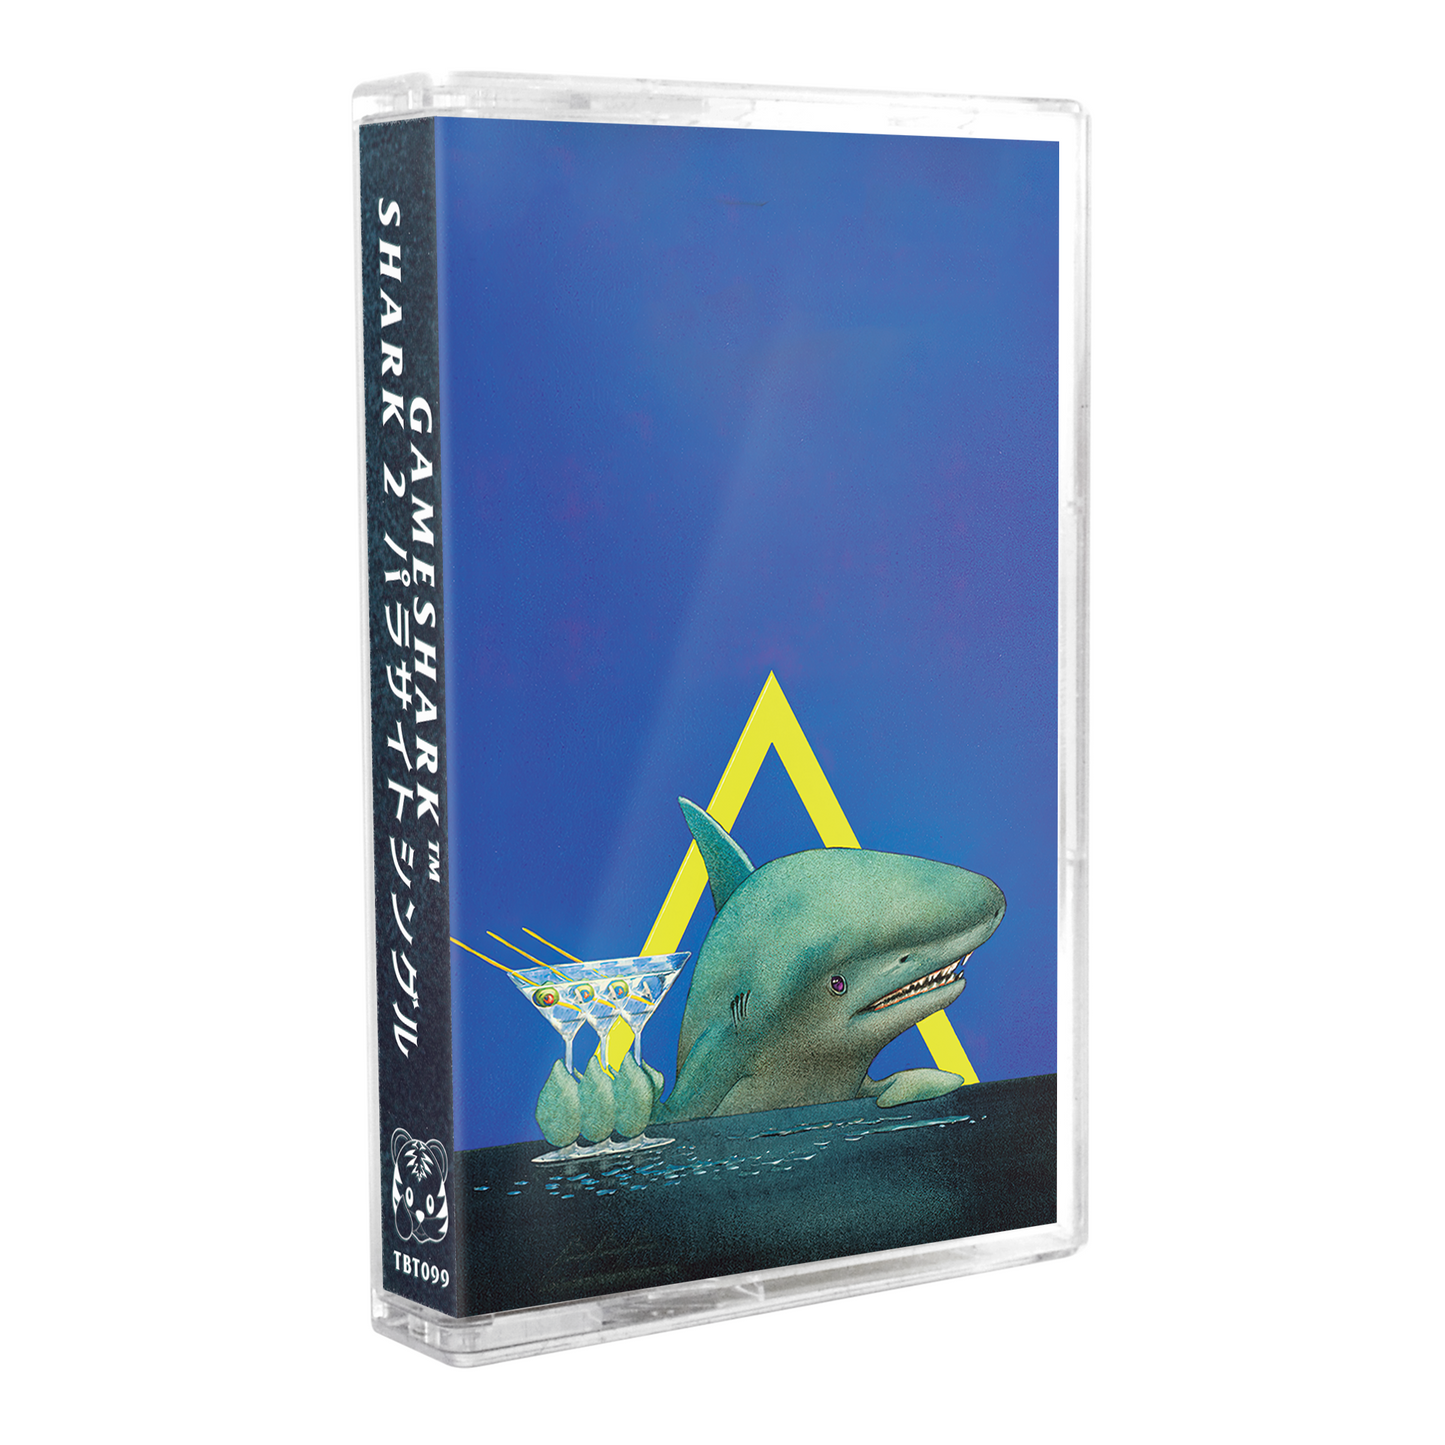 ＧＡＭＥＳＨＡＲＫ™ - "SHARK 2 パラサイトシングル" Limited Edition Cassette Tape